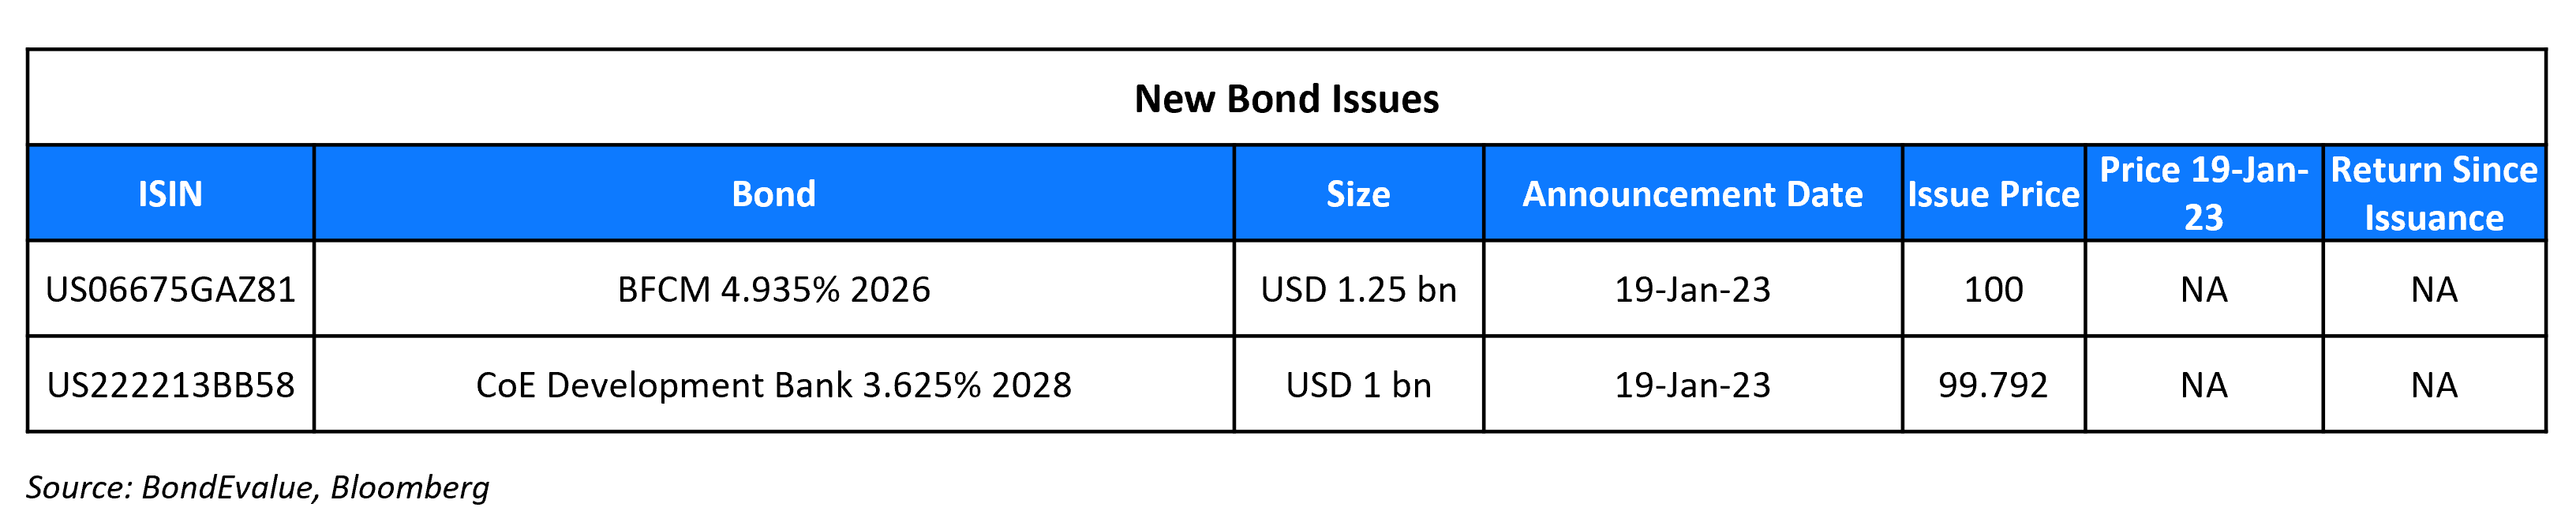 New Bond Issues 20 Jan 23